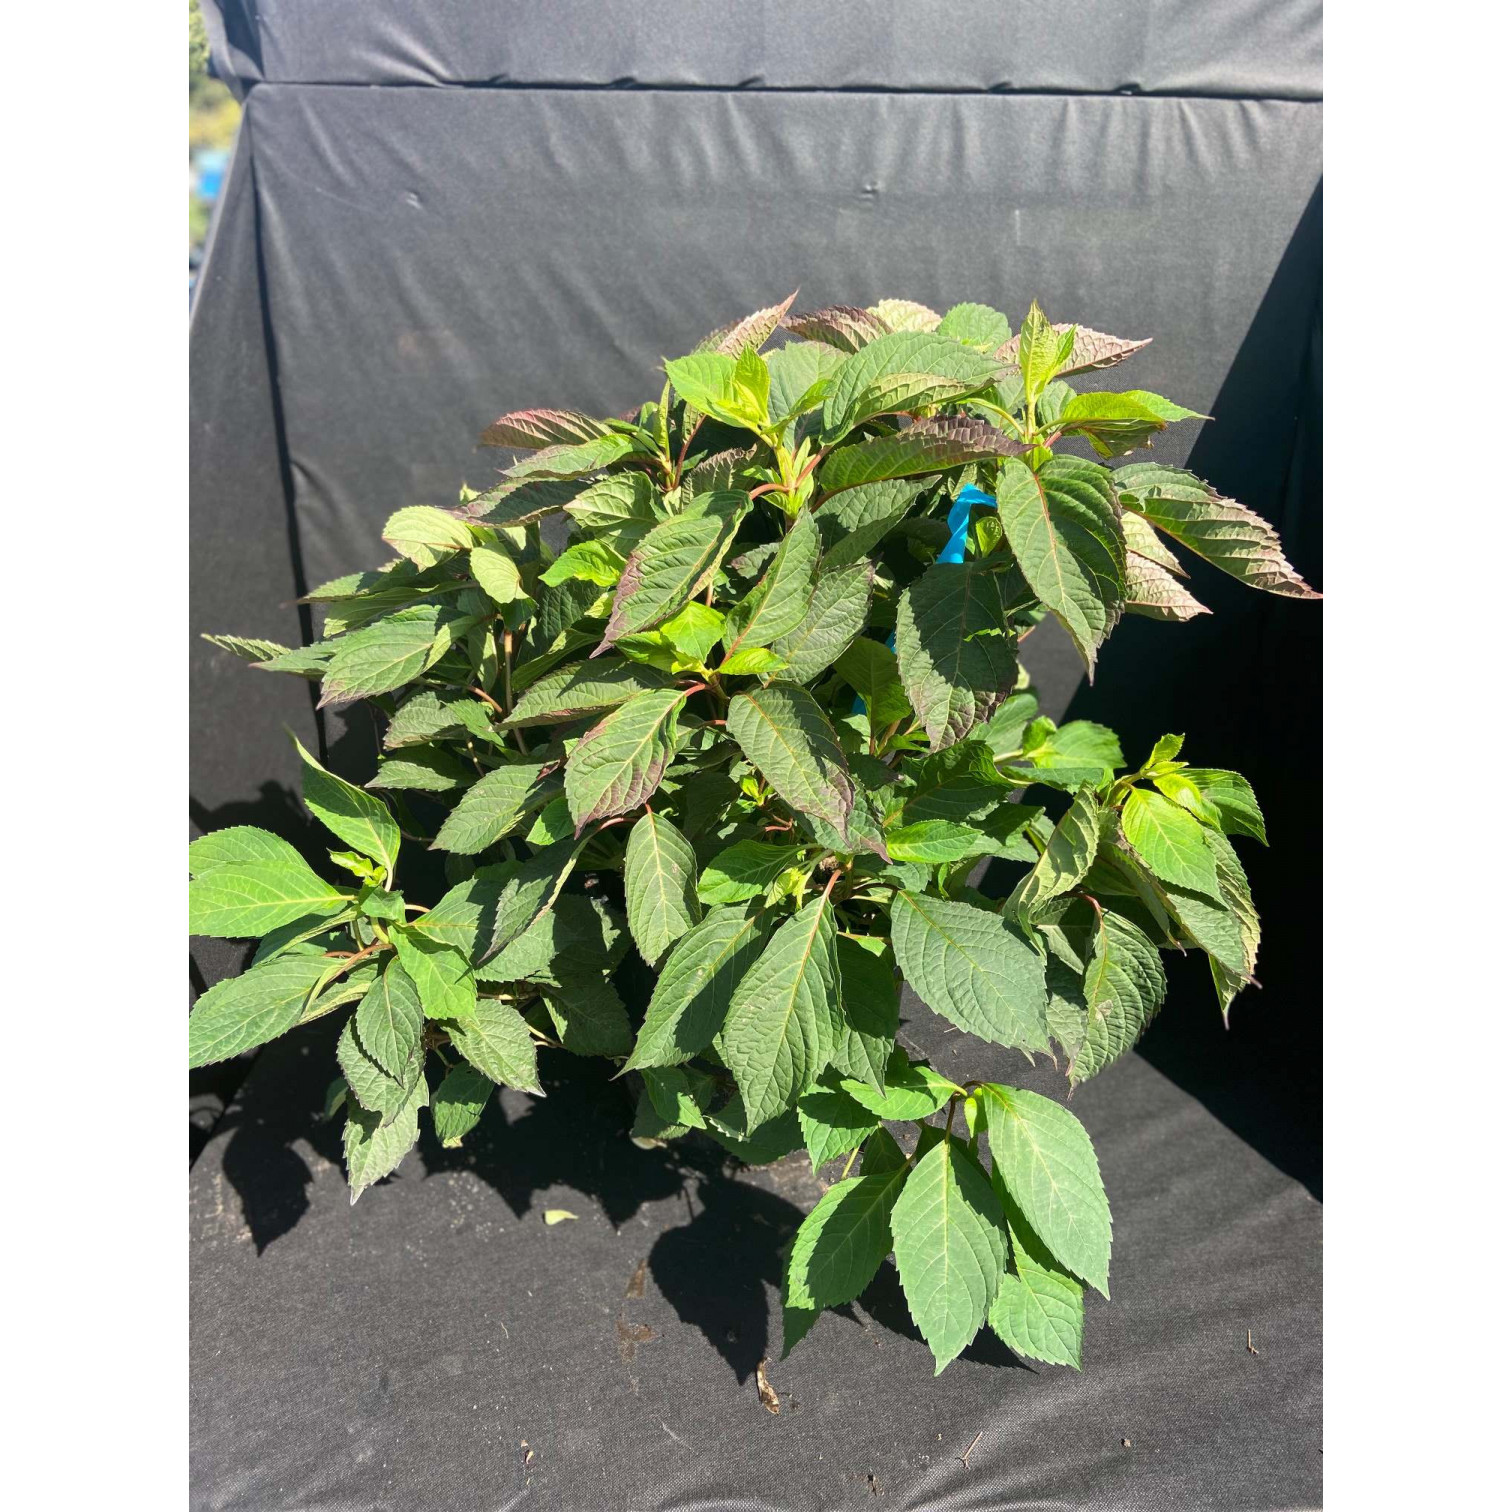 Hydrangea serrata 'Blueberry Cheescake'  50-55cm high including pot - 20 litre pot